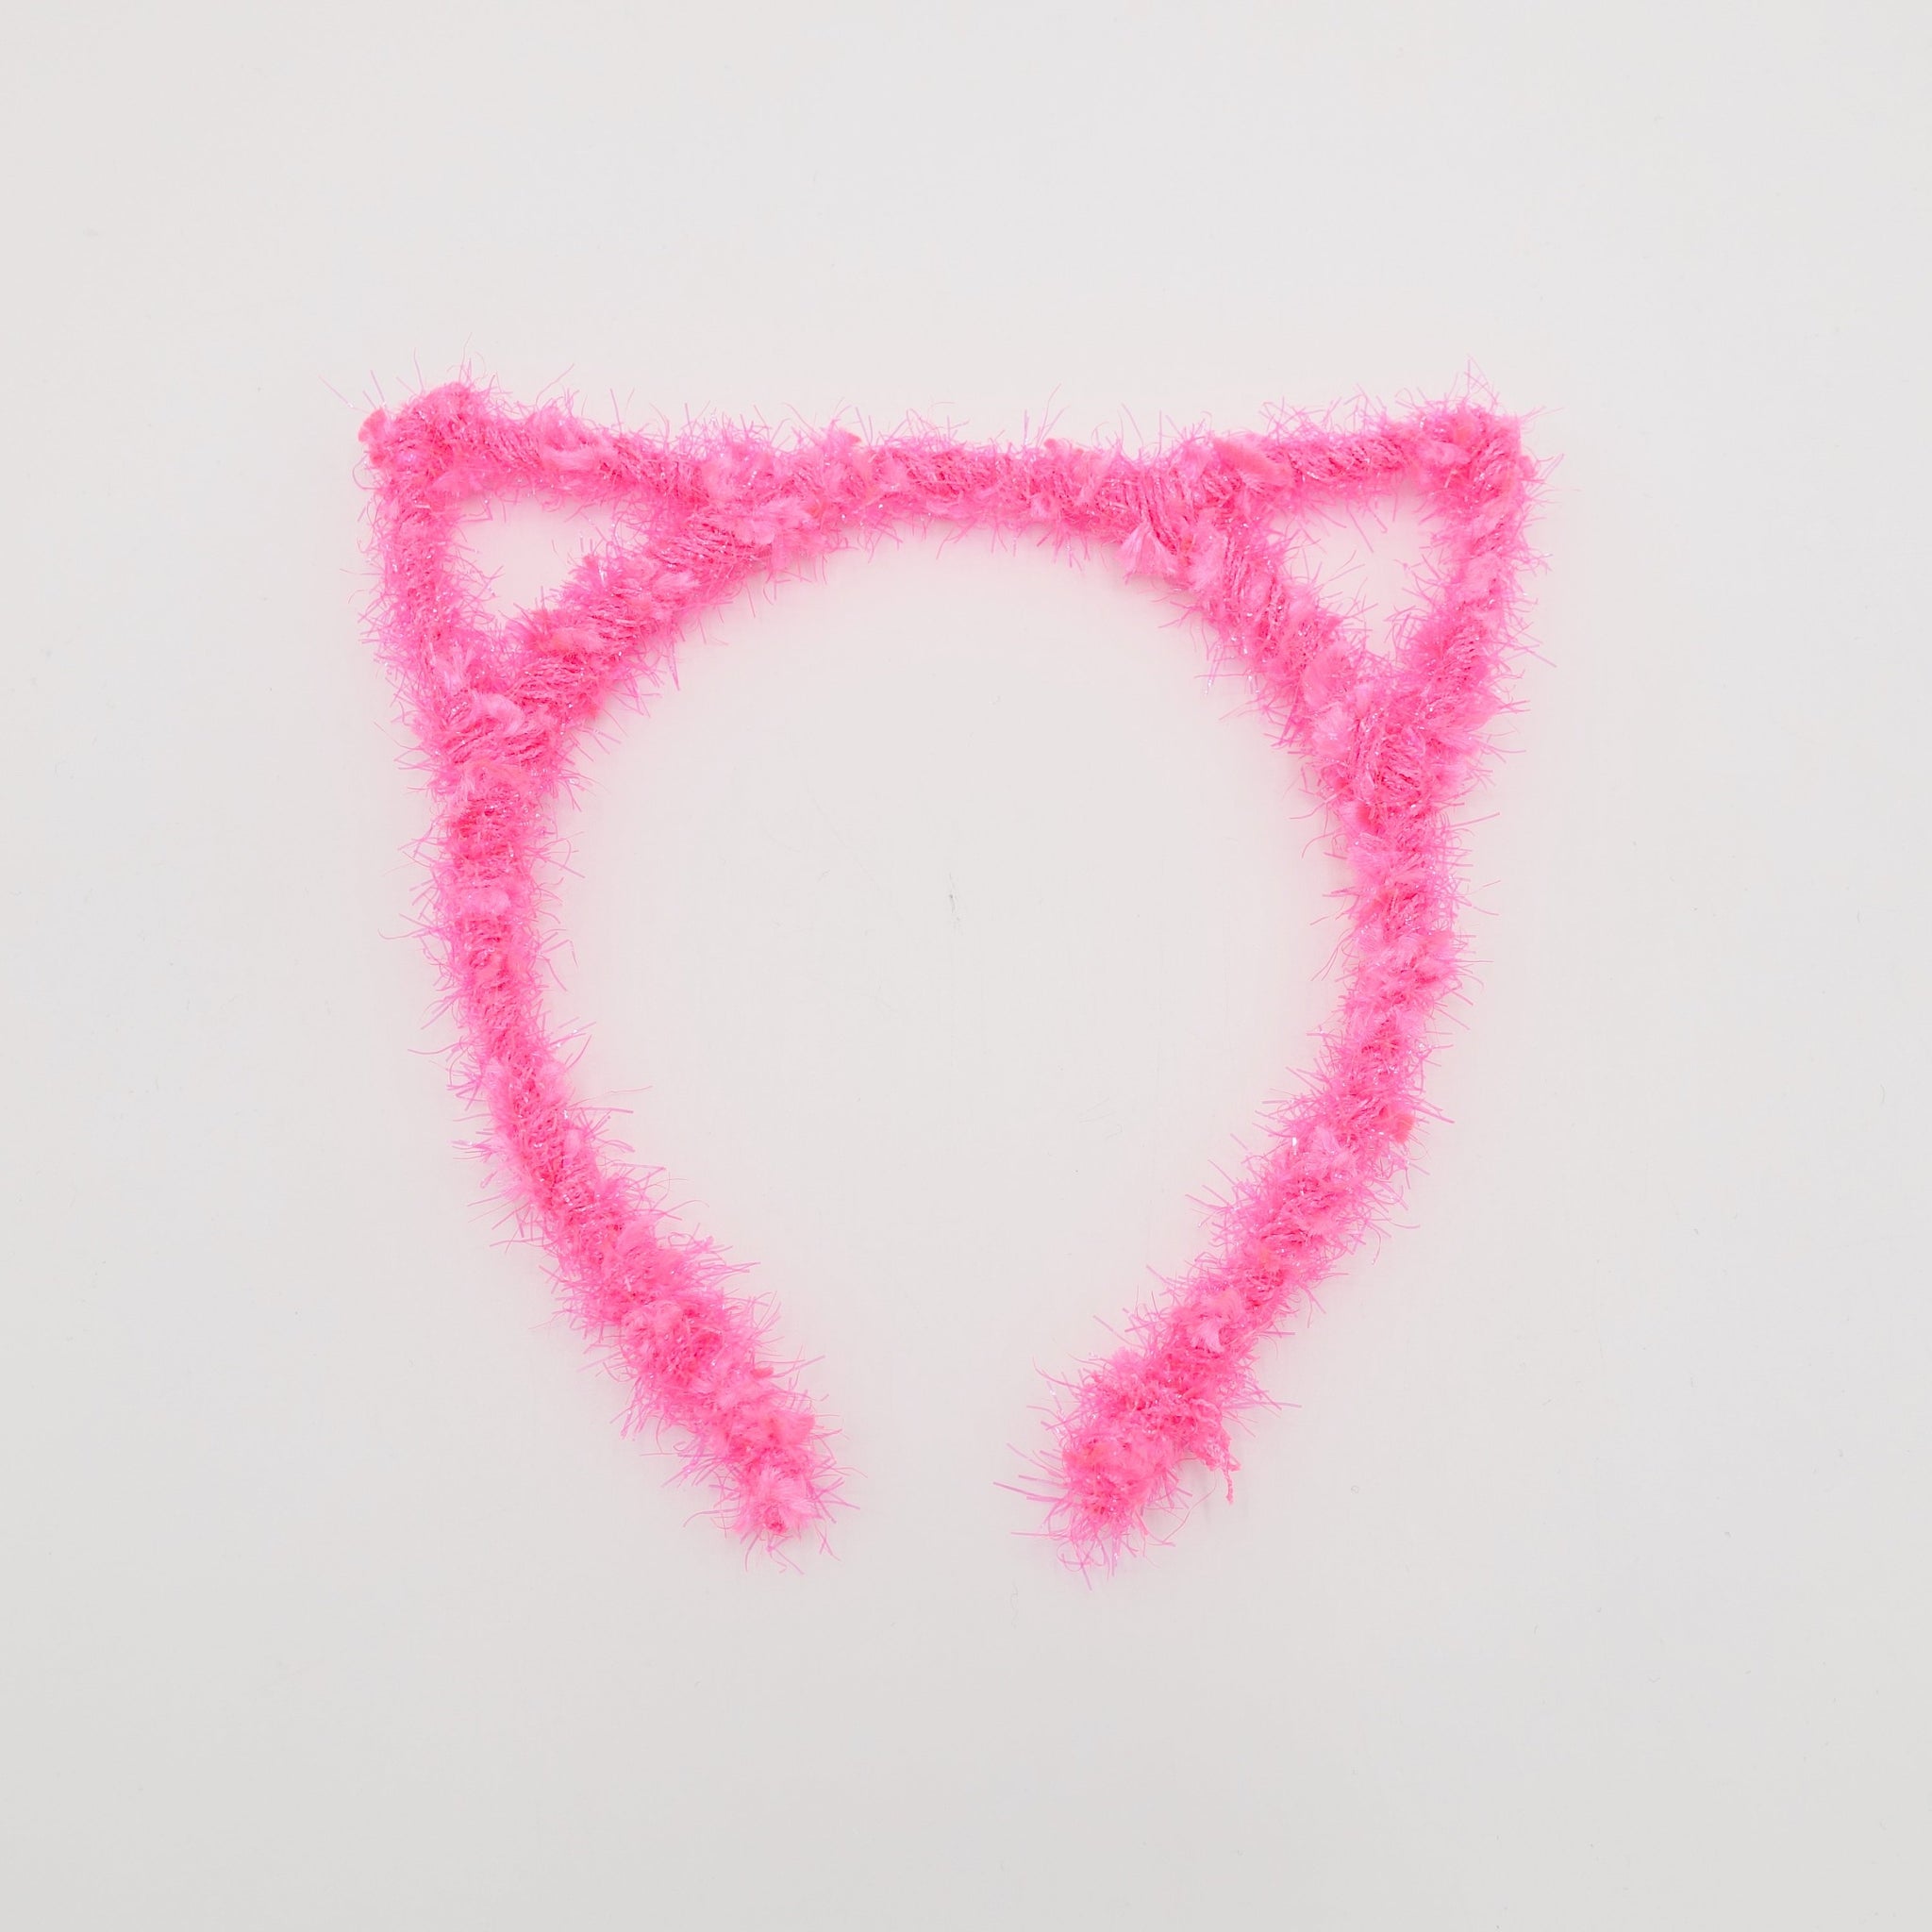 VeryShine Headband Neon pink cat ear headband frayed edge fabric wrap event headband